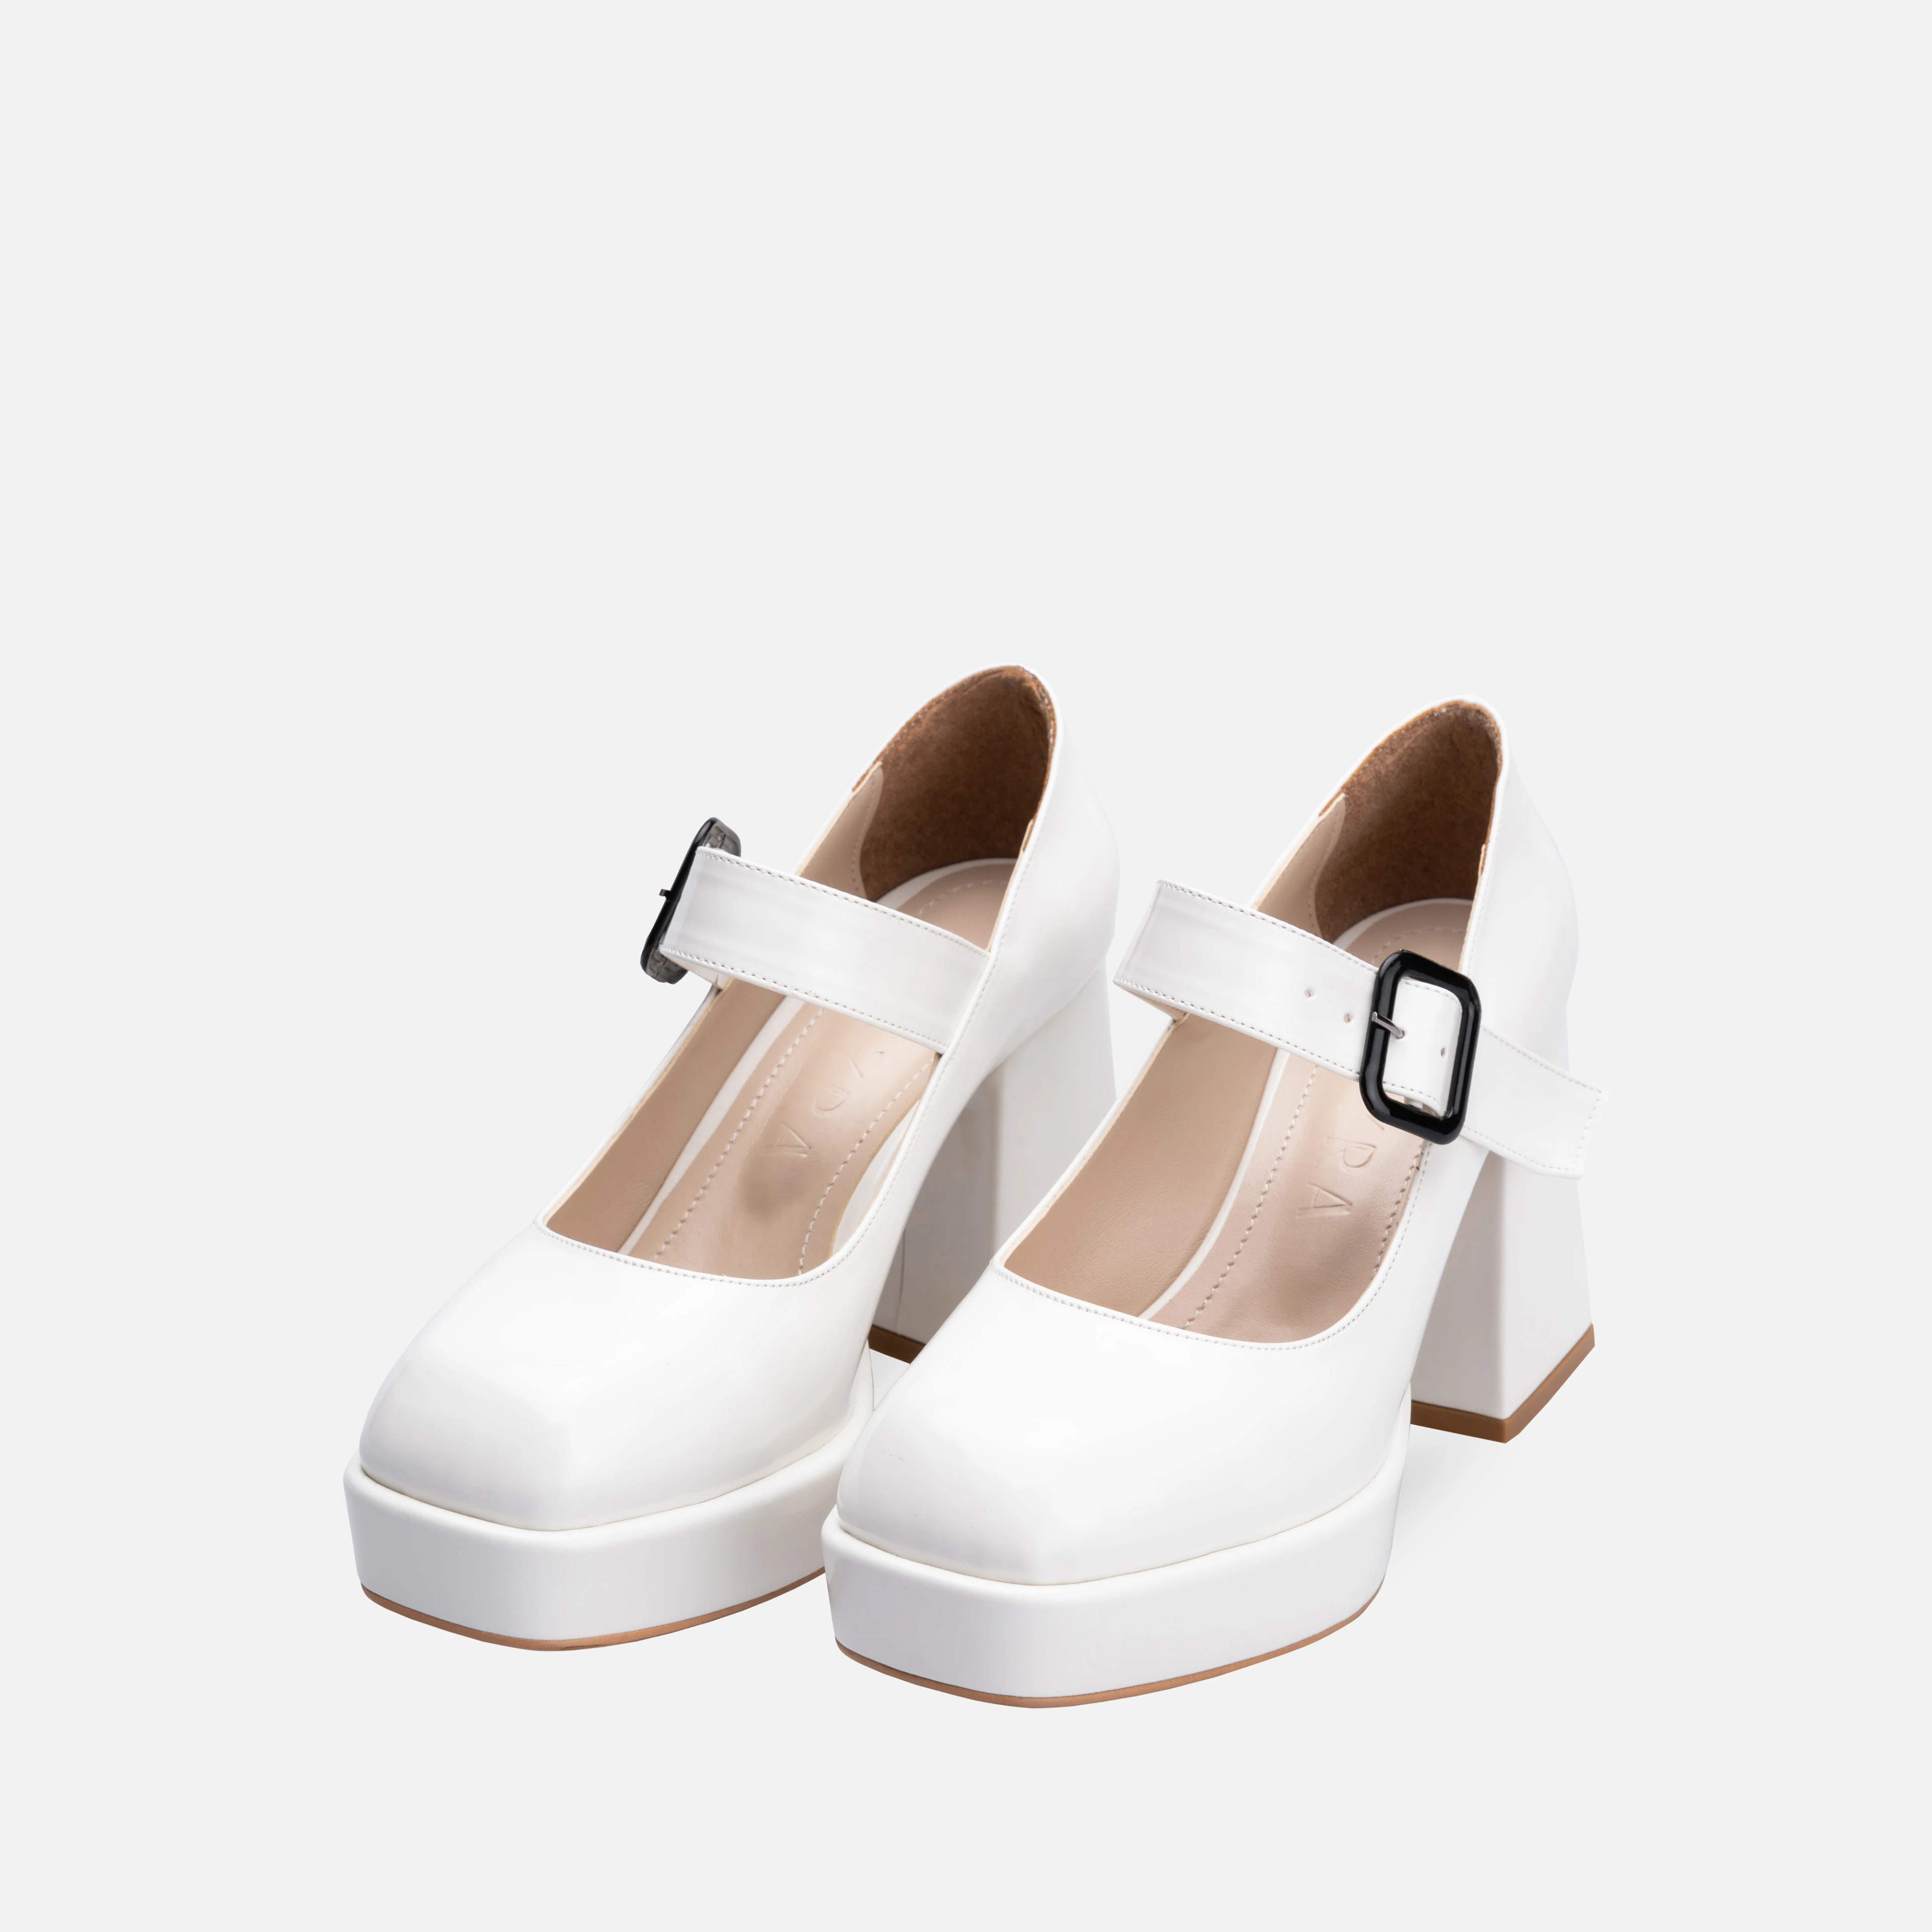 Scarlett Patent Leather Platform Heeled Shoes White